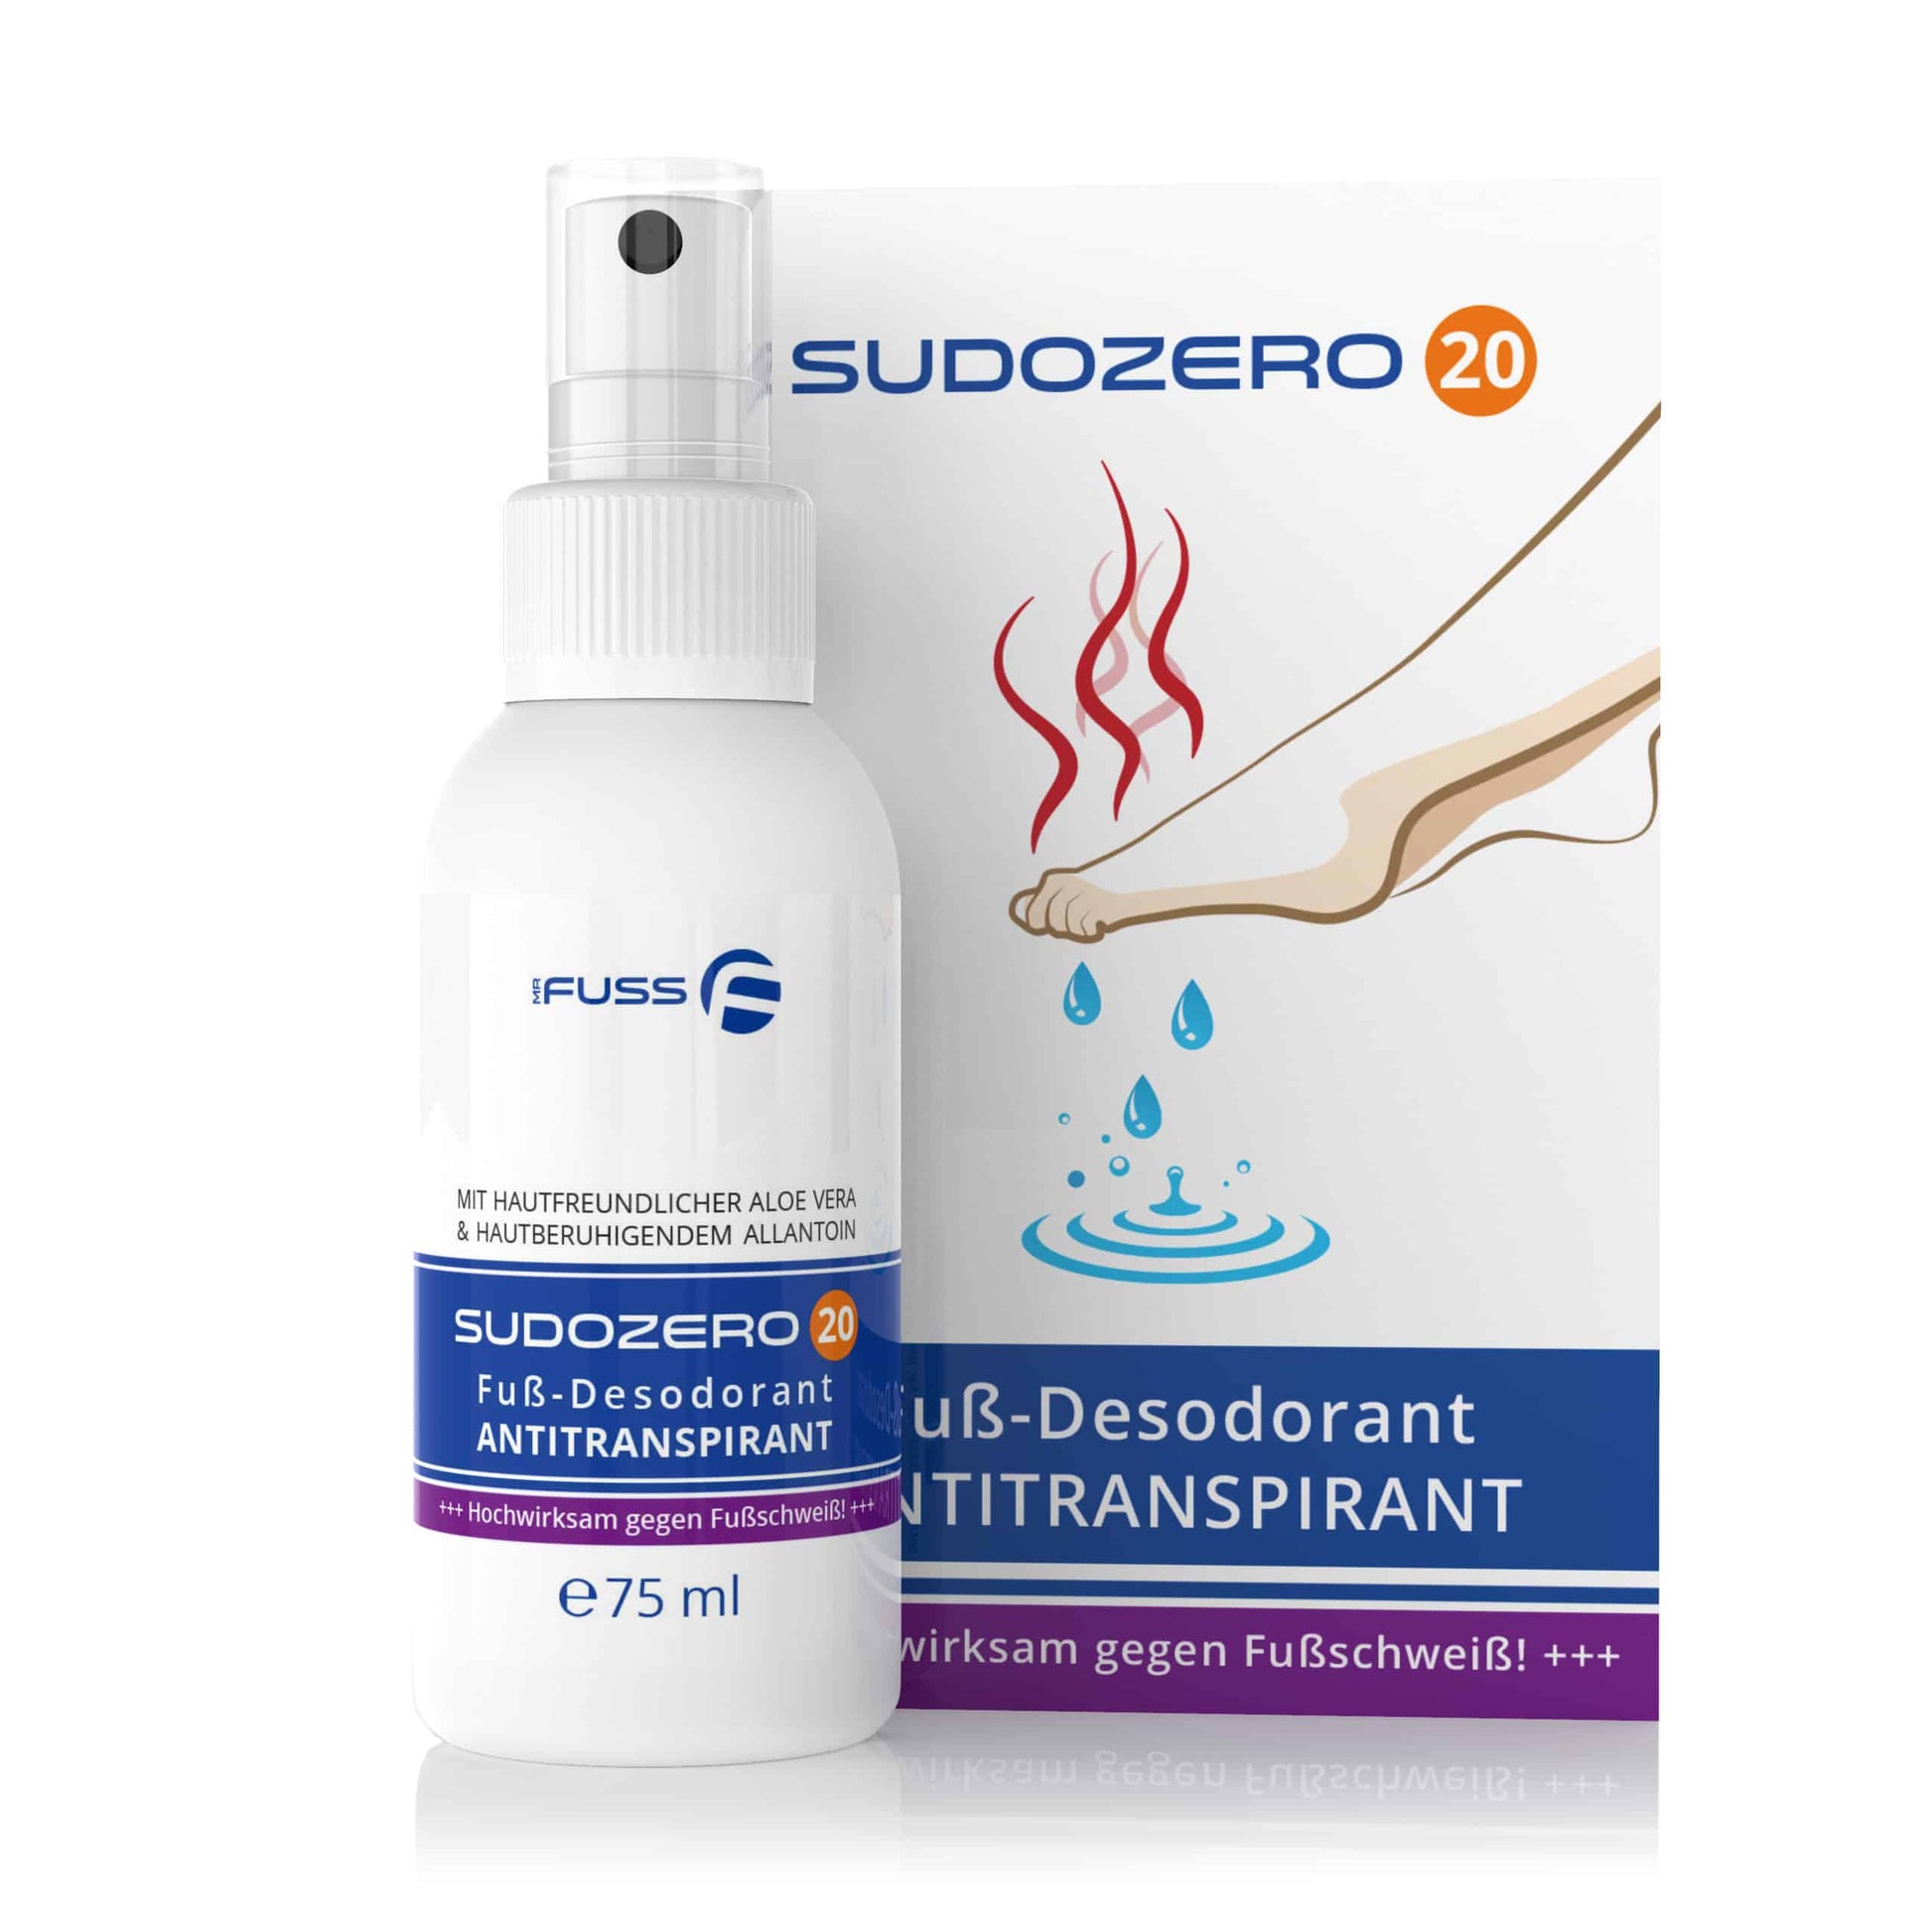 Mr. Fuss® - Sudozero 20 - Fuß-Desodorant / Antitranspirant - 75ml - SENANA